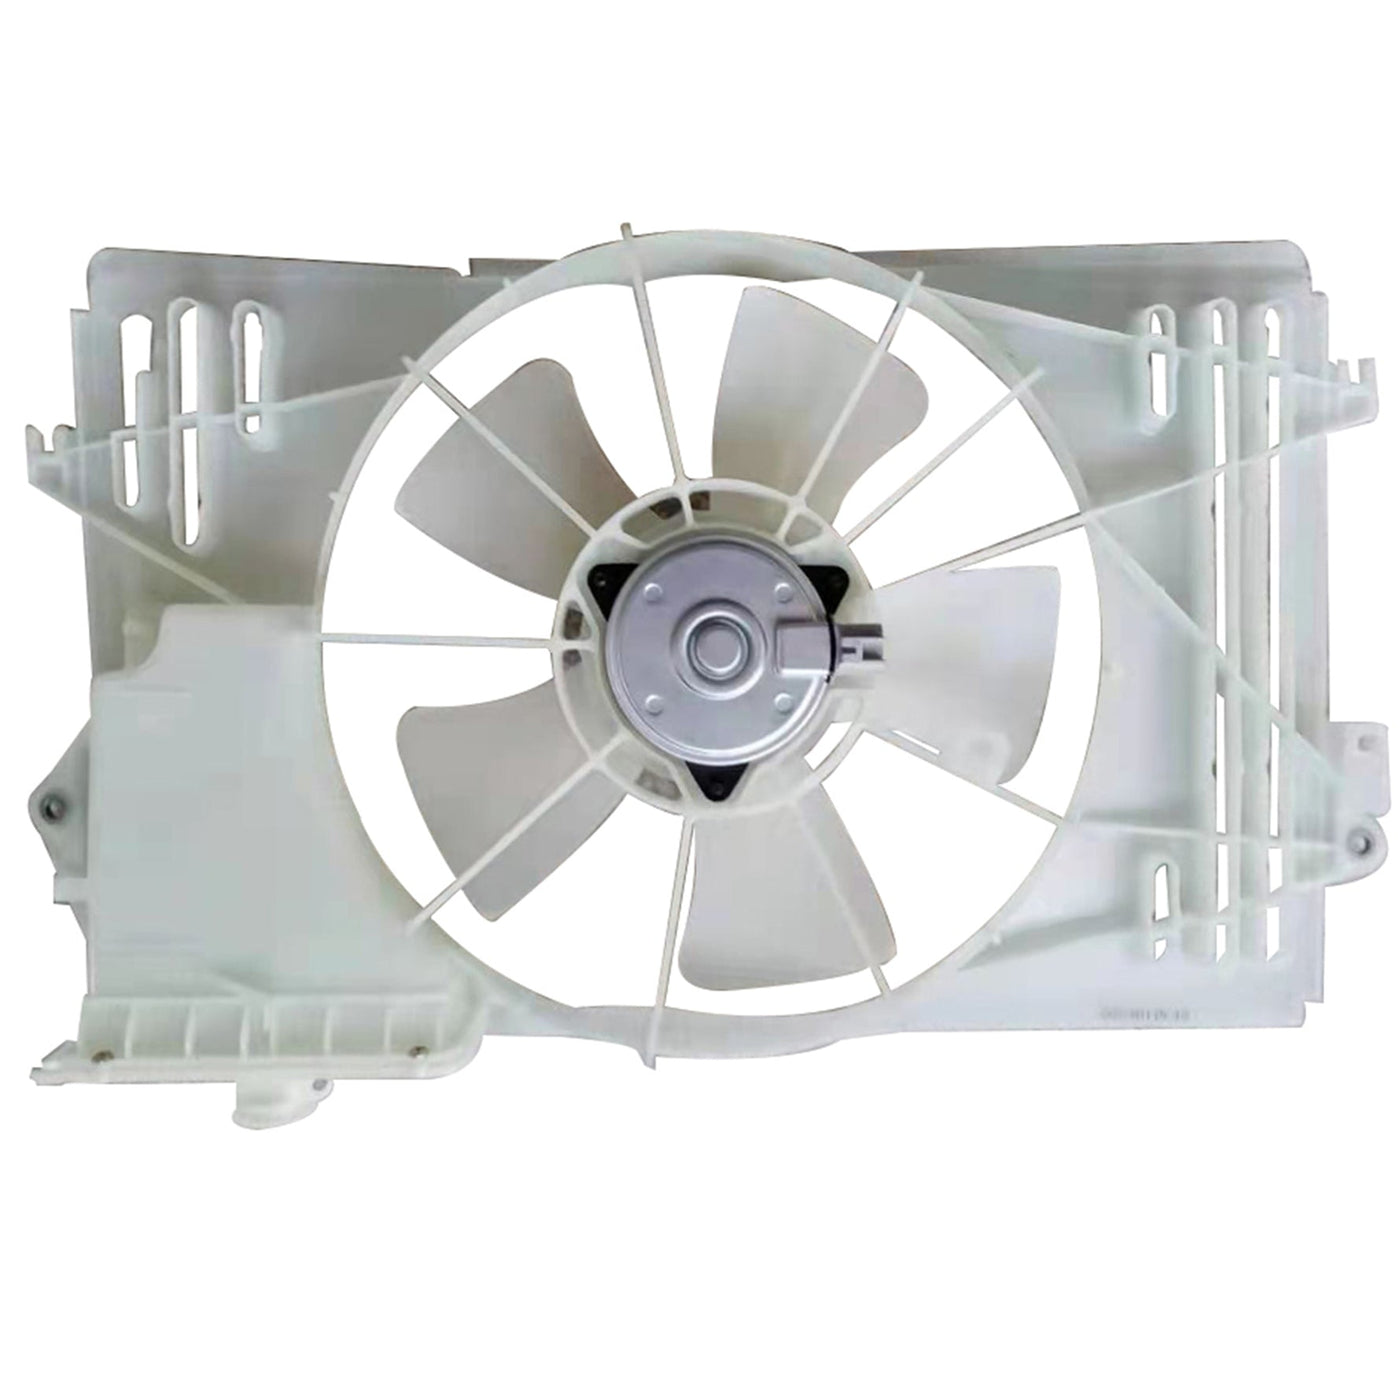 For 2003-08 Toyota Corolla Matrix 1.8L Radiator Cooling Fan & Motor Assembly